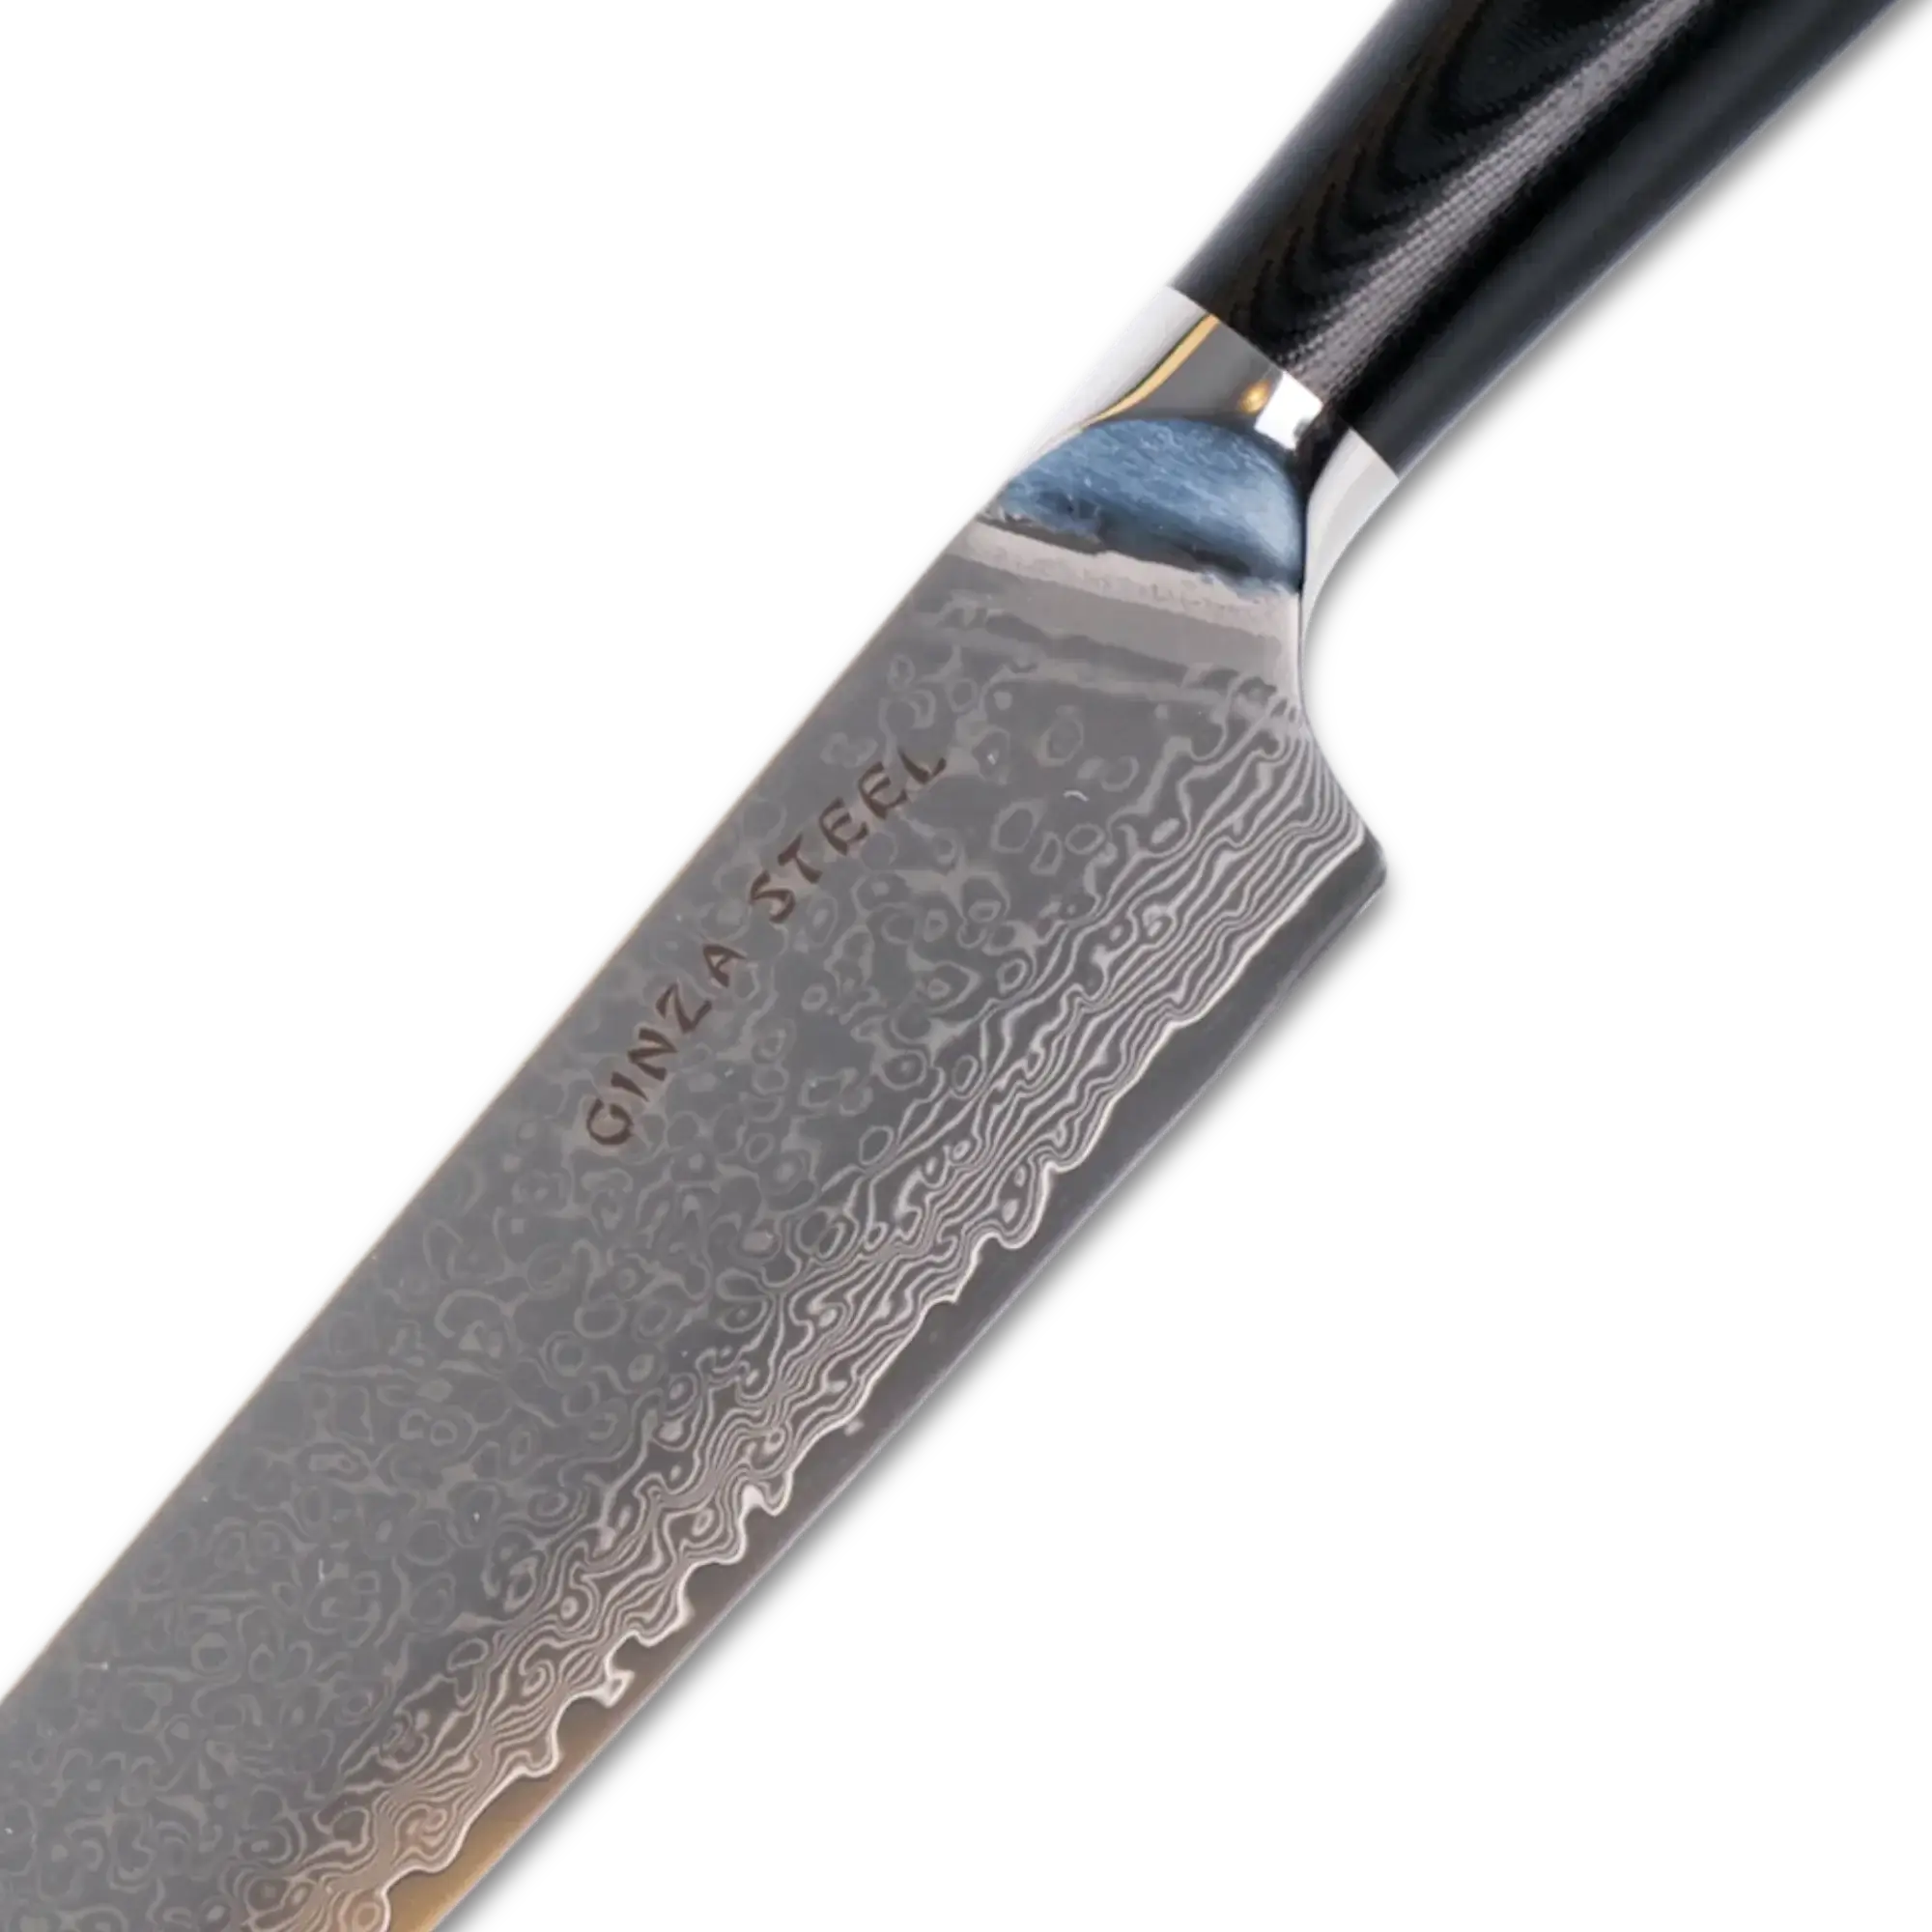 Hagakure 20 - Japanese Santoku Knife 8" - VG10 Damascus Steel